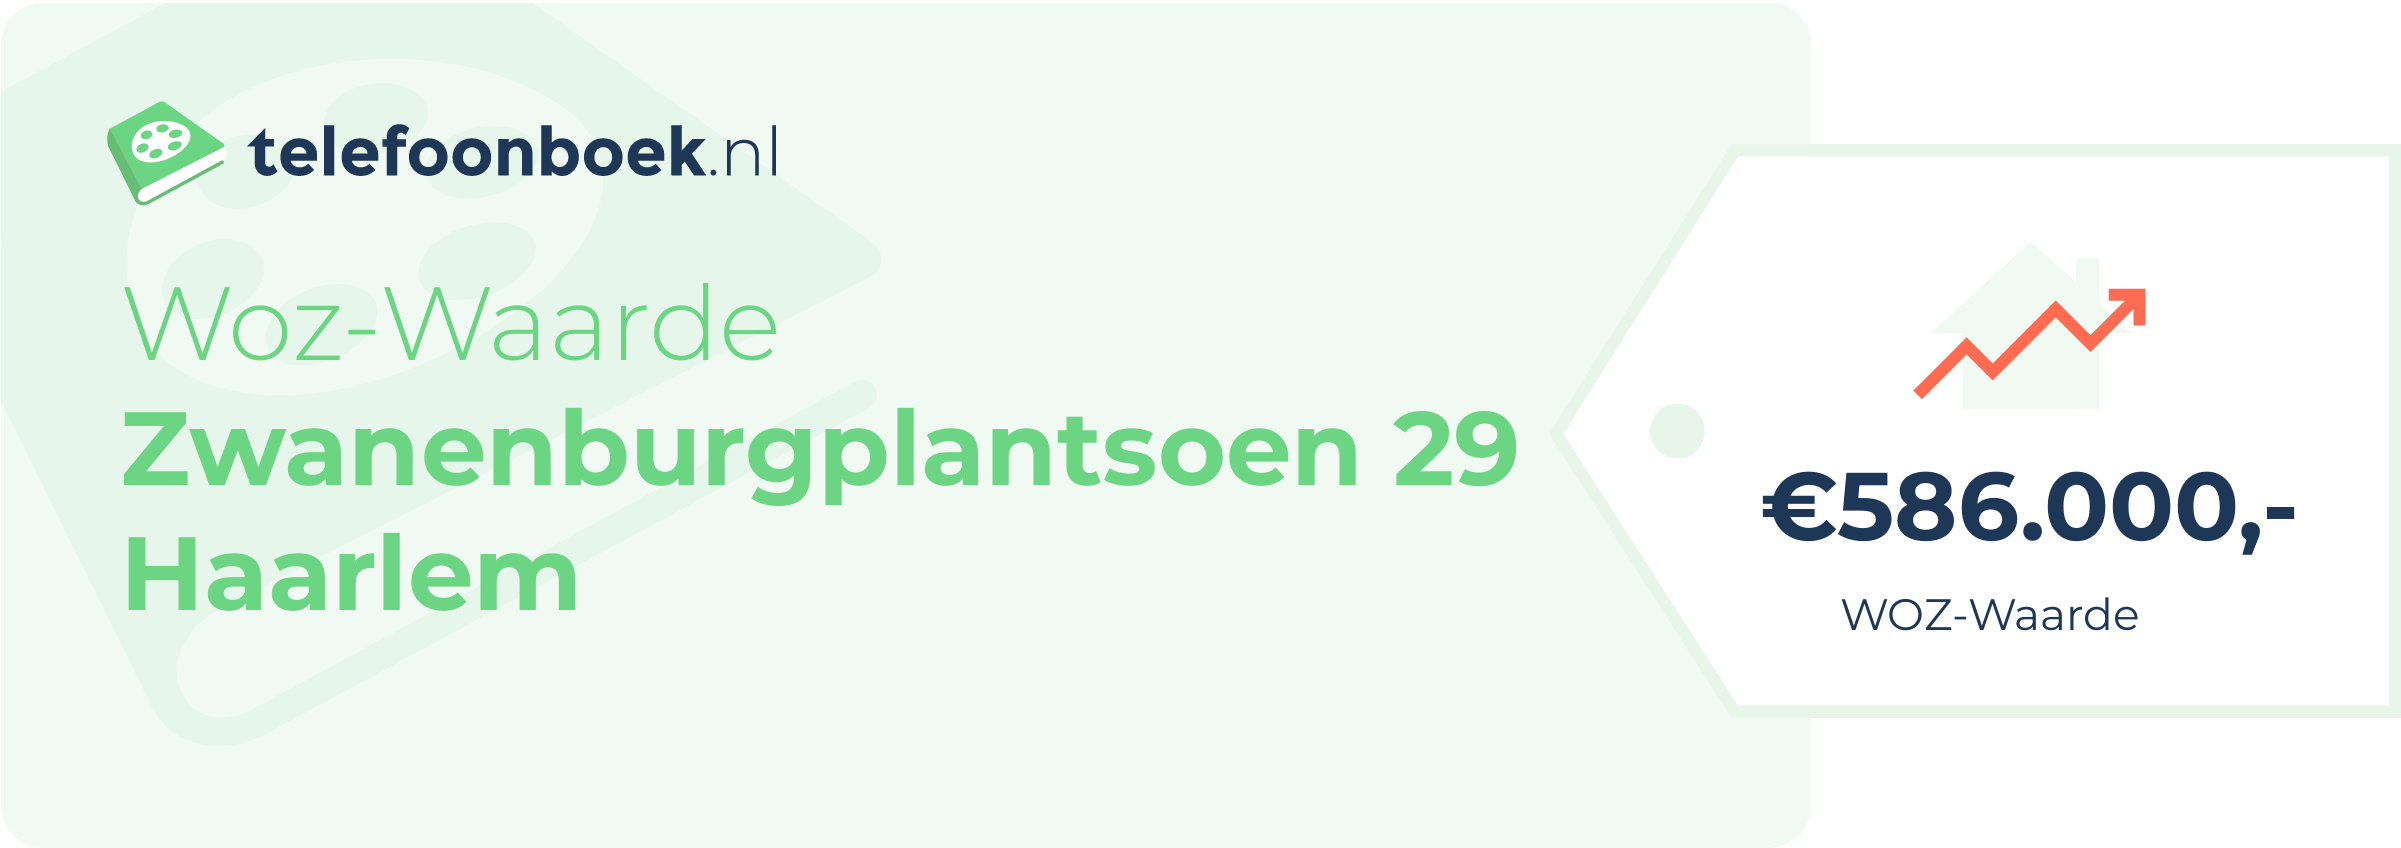 WOZ-waarde Zwanenburgplantsoen 29 Haarlem